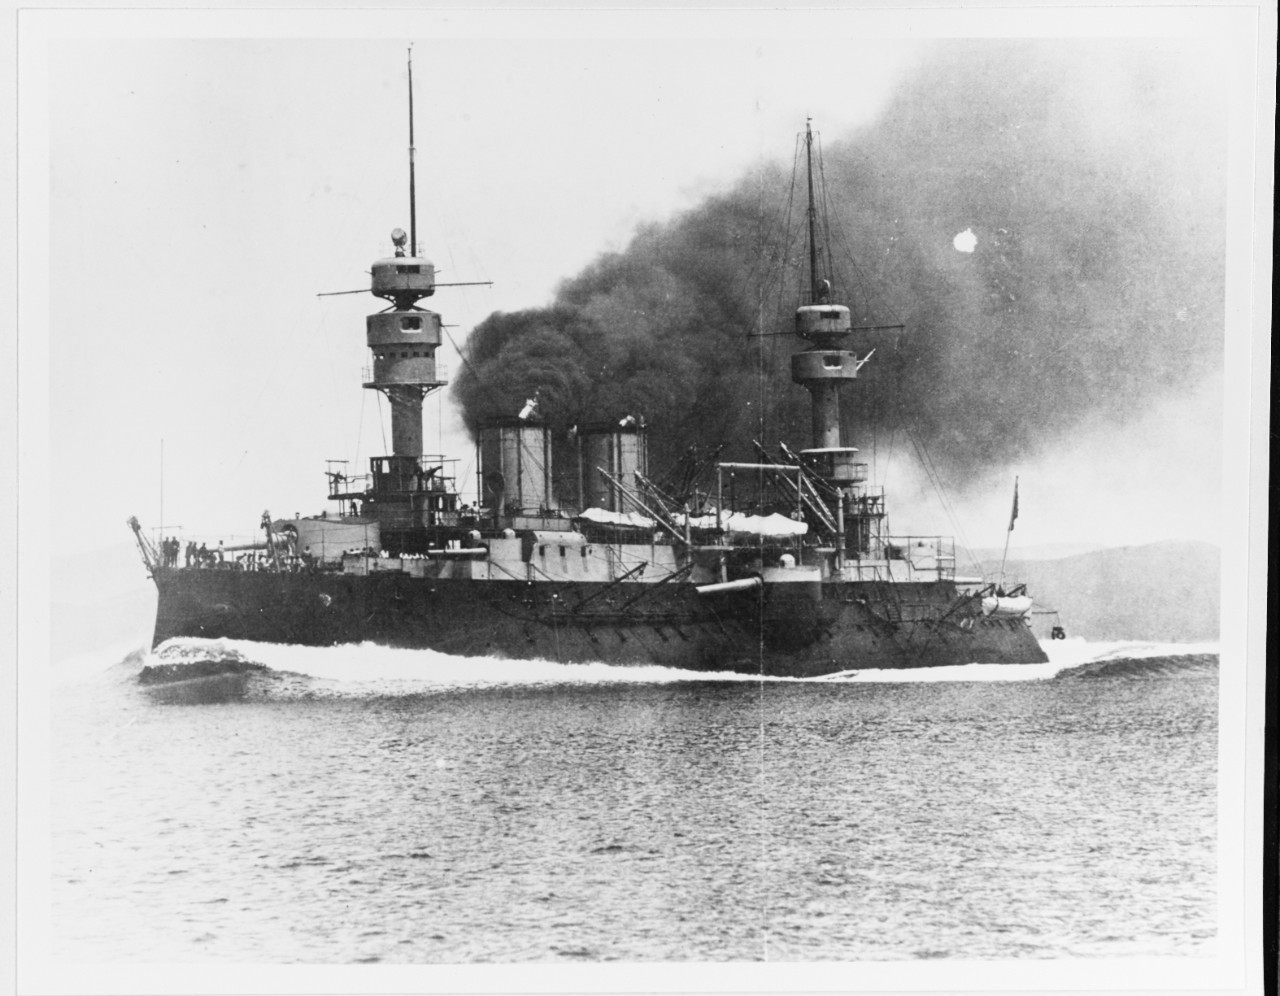 JAUREGUIBERRY (French battleship, 1893-1934)